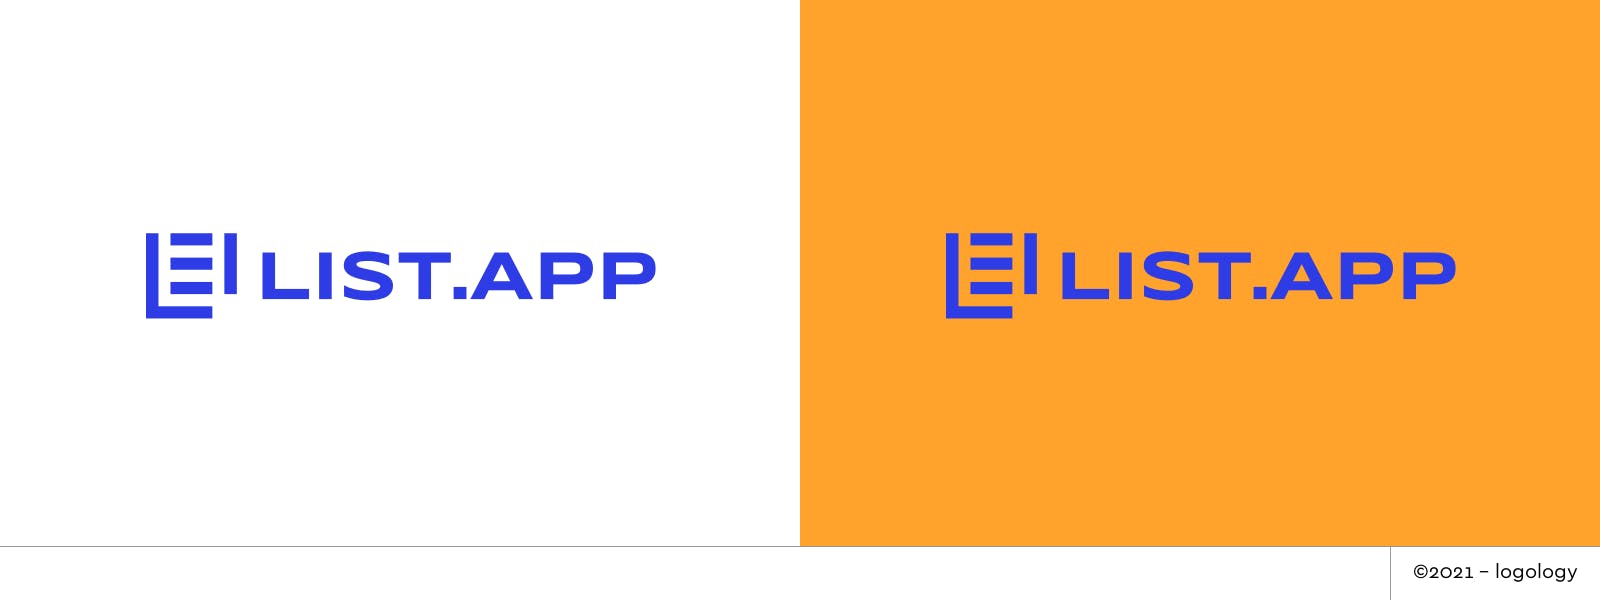 list.app logo proposal 1